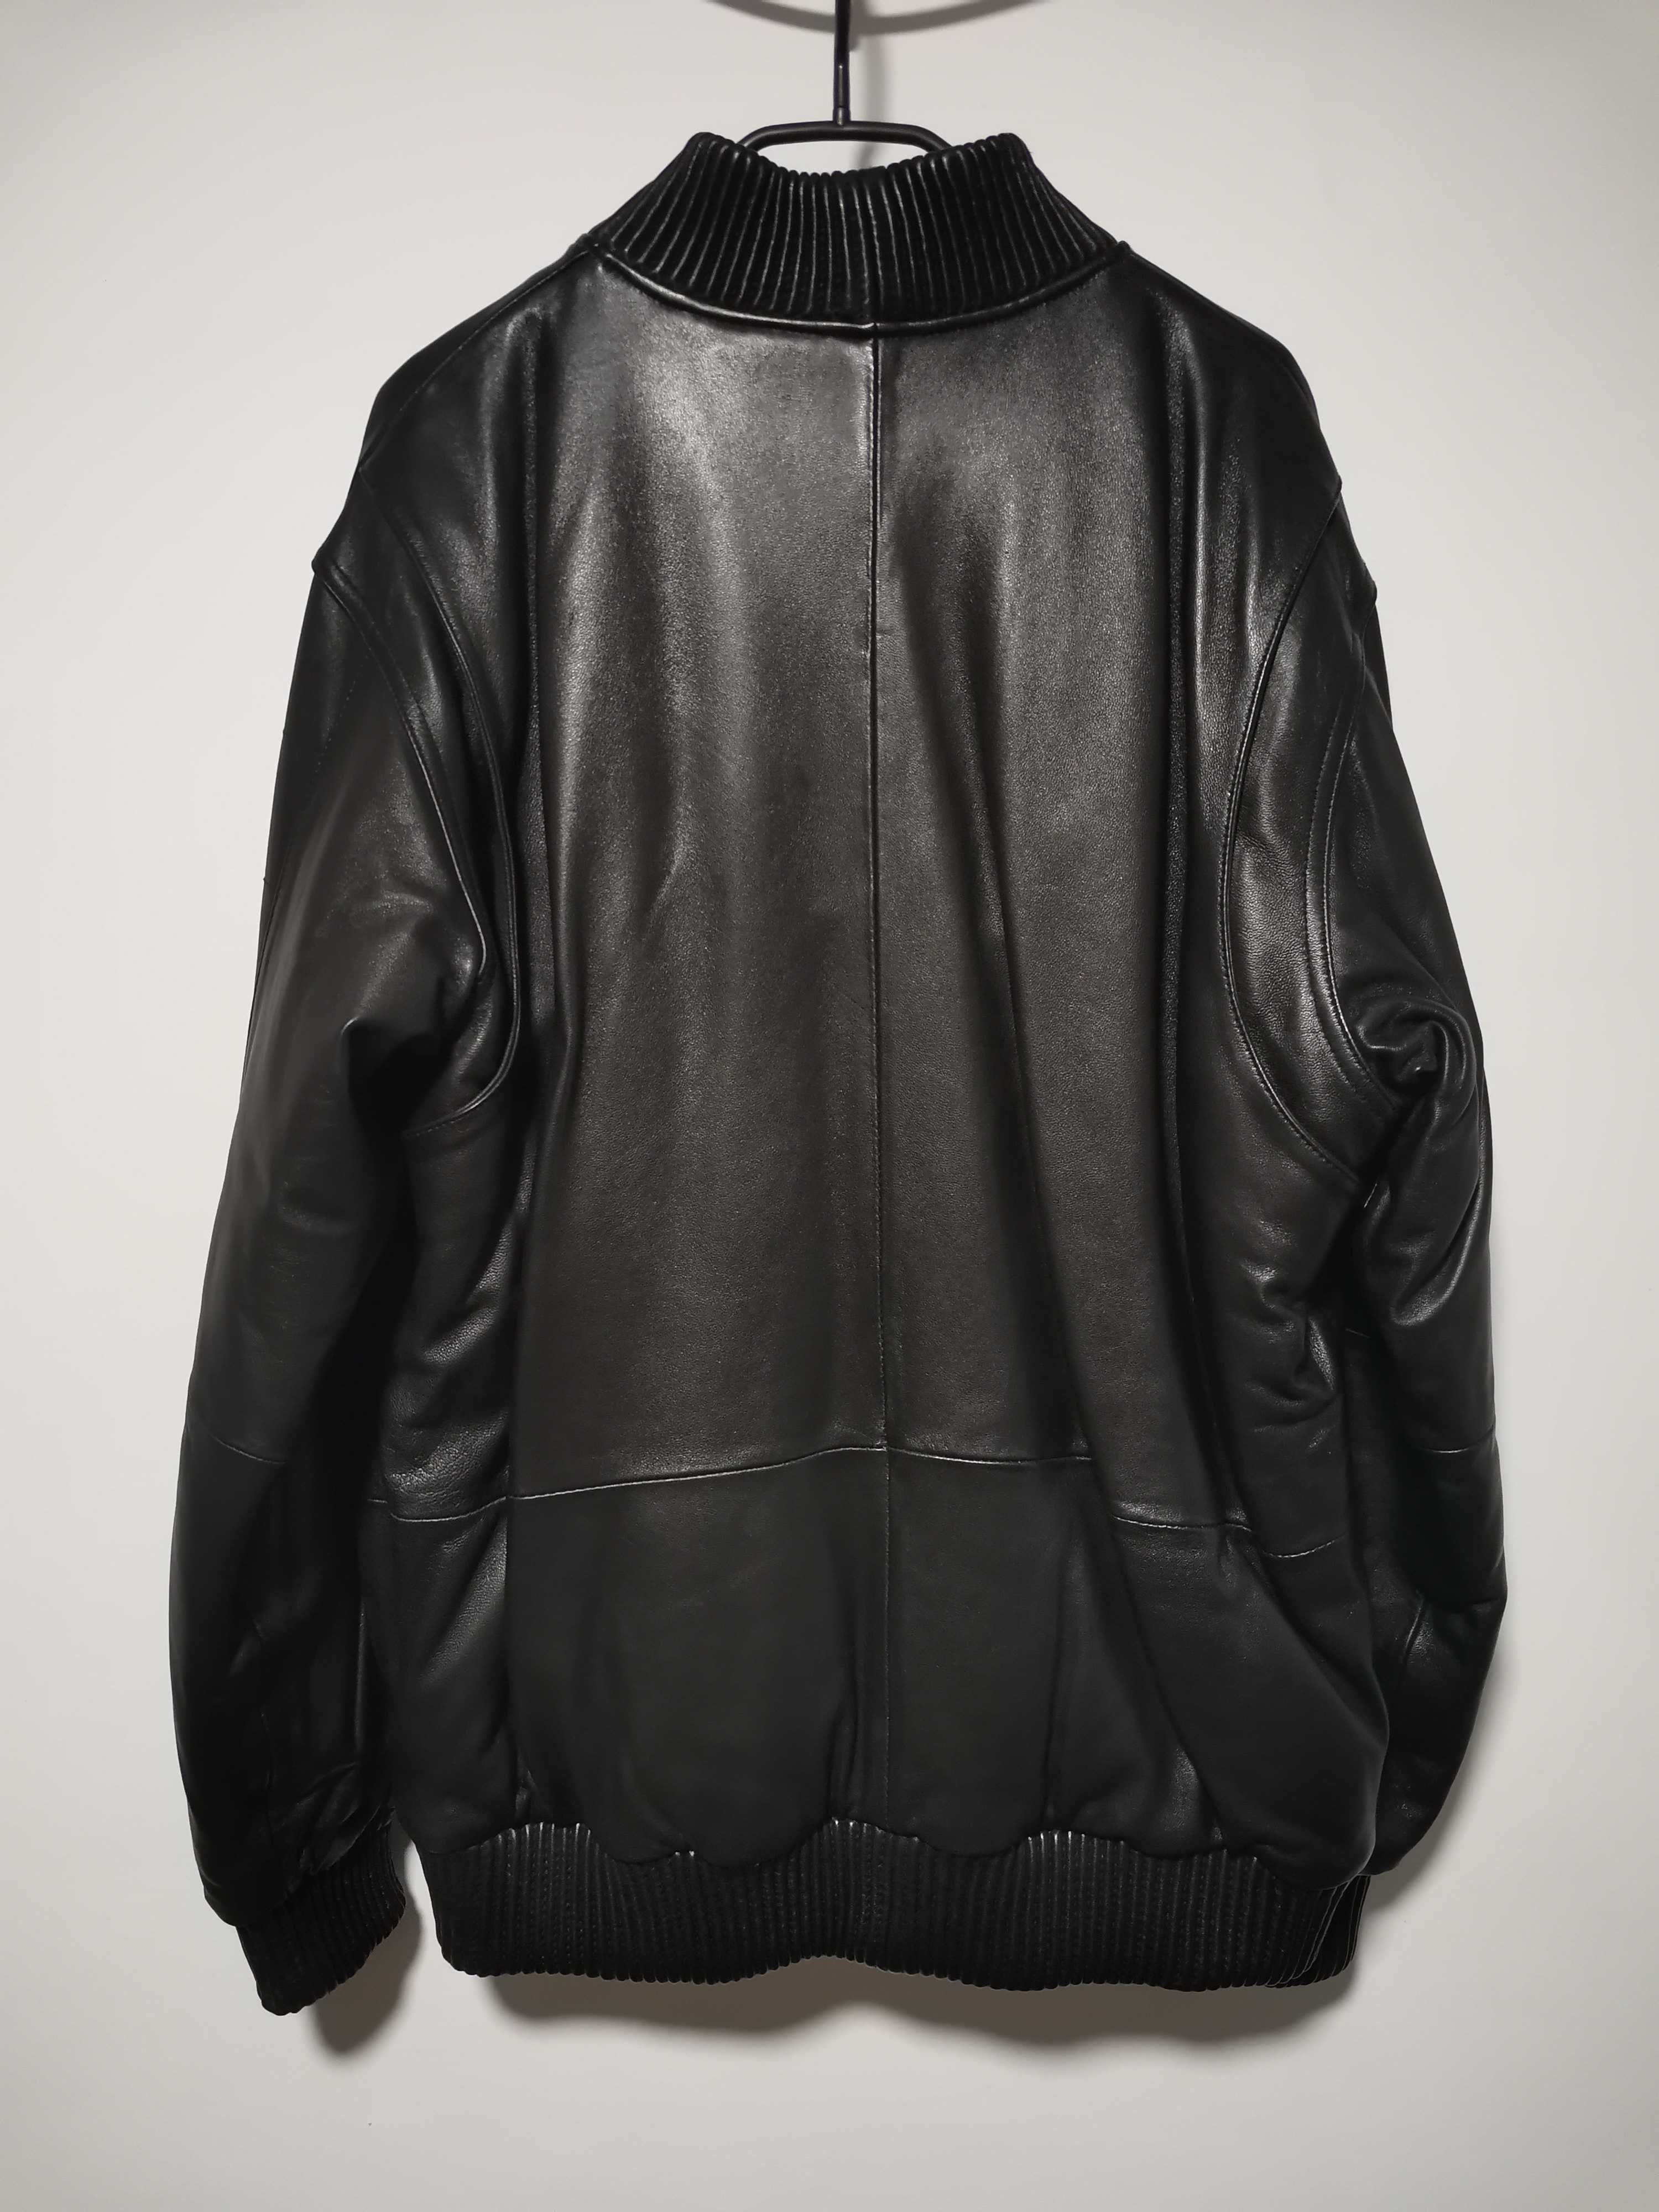 Sean John 'Leather Flight Jacket' (L)